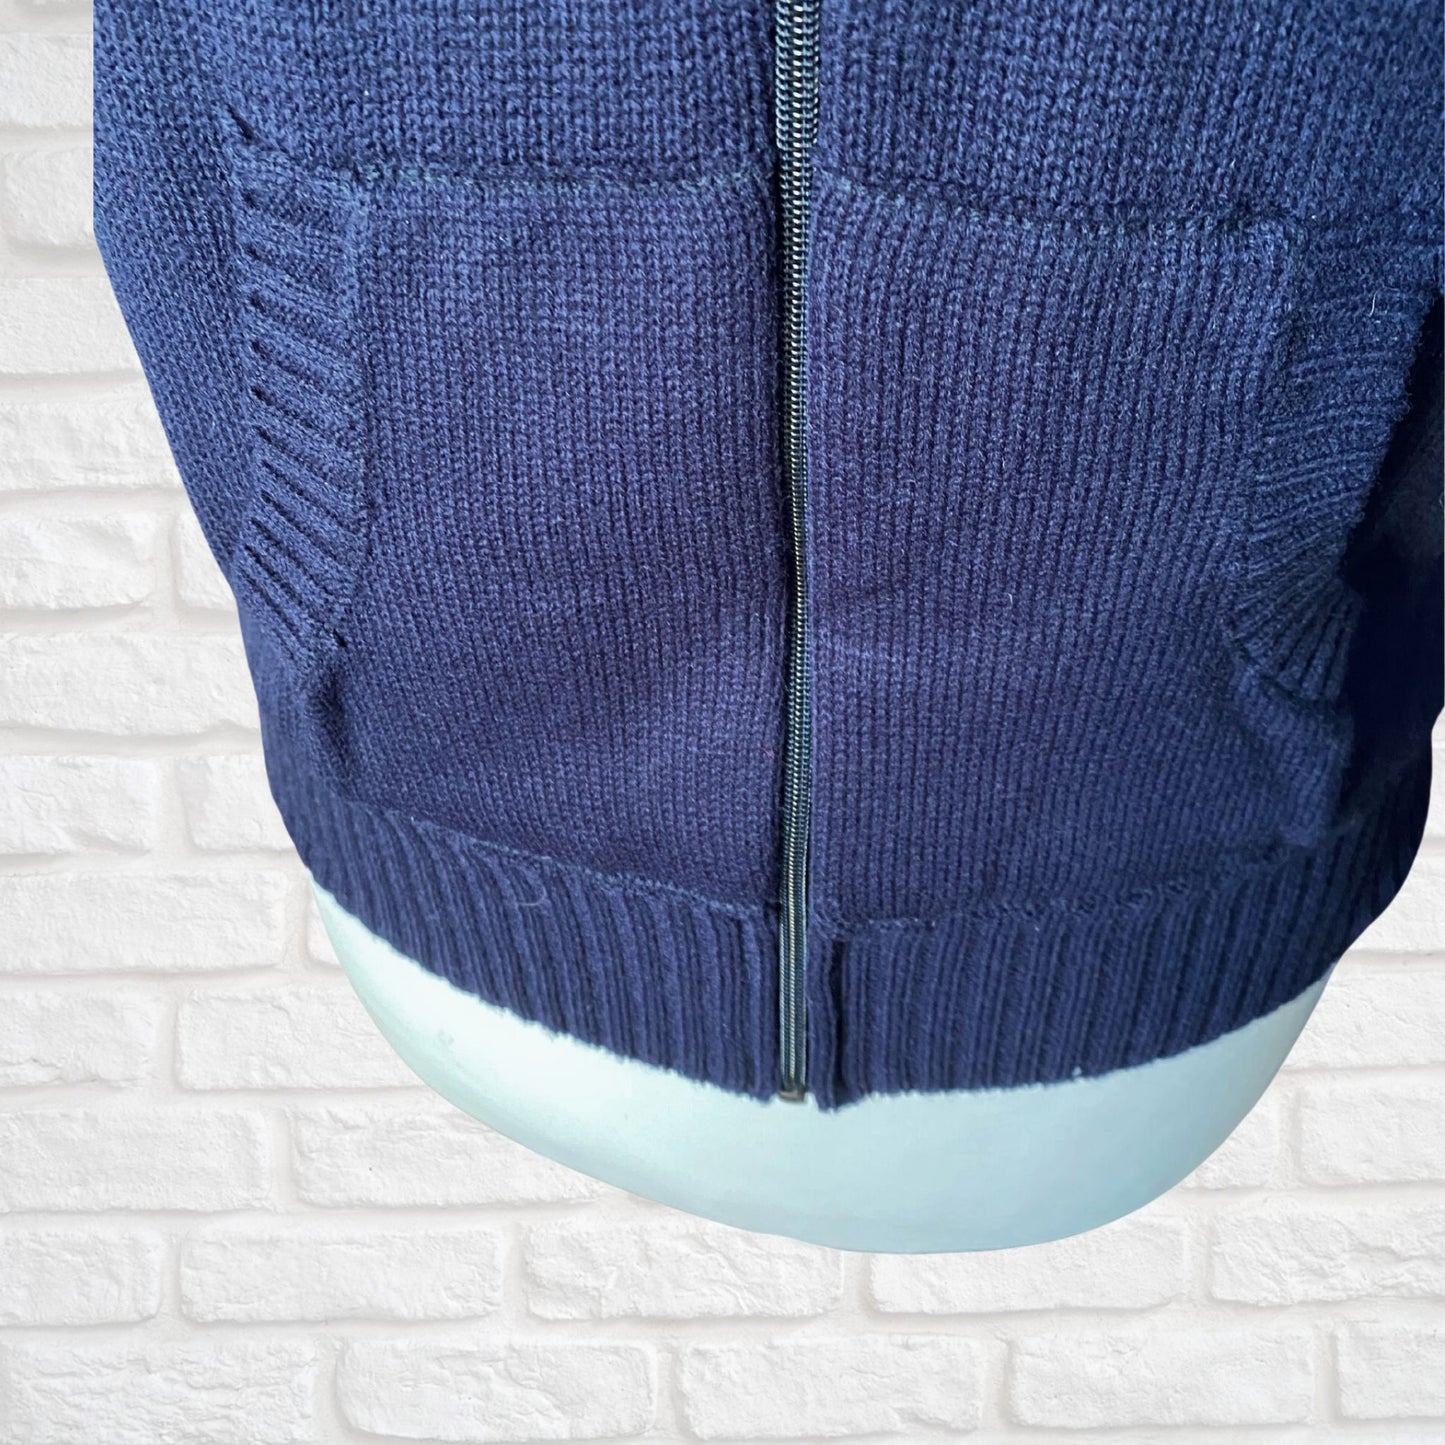 70s Vintage Blue Zip Up Cardigan with Tartan Detailing. Approx UK size 12 -14 (women) / small (men)